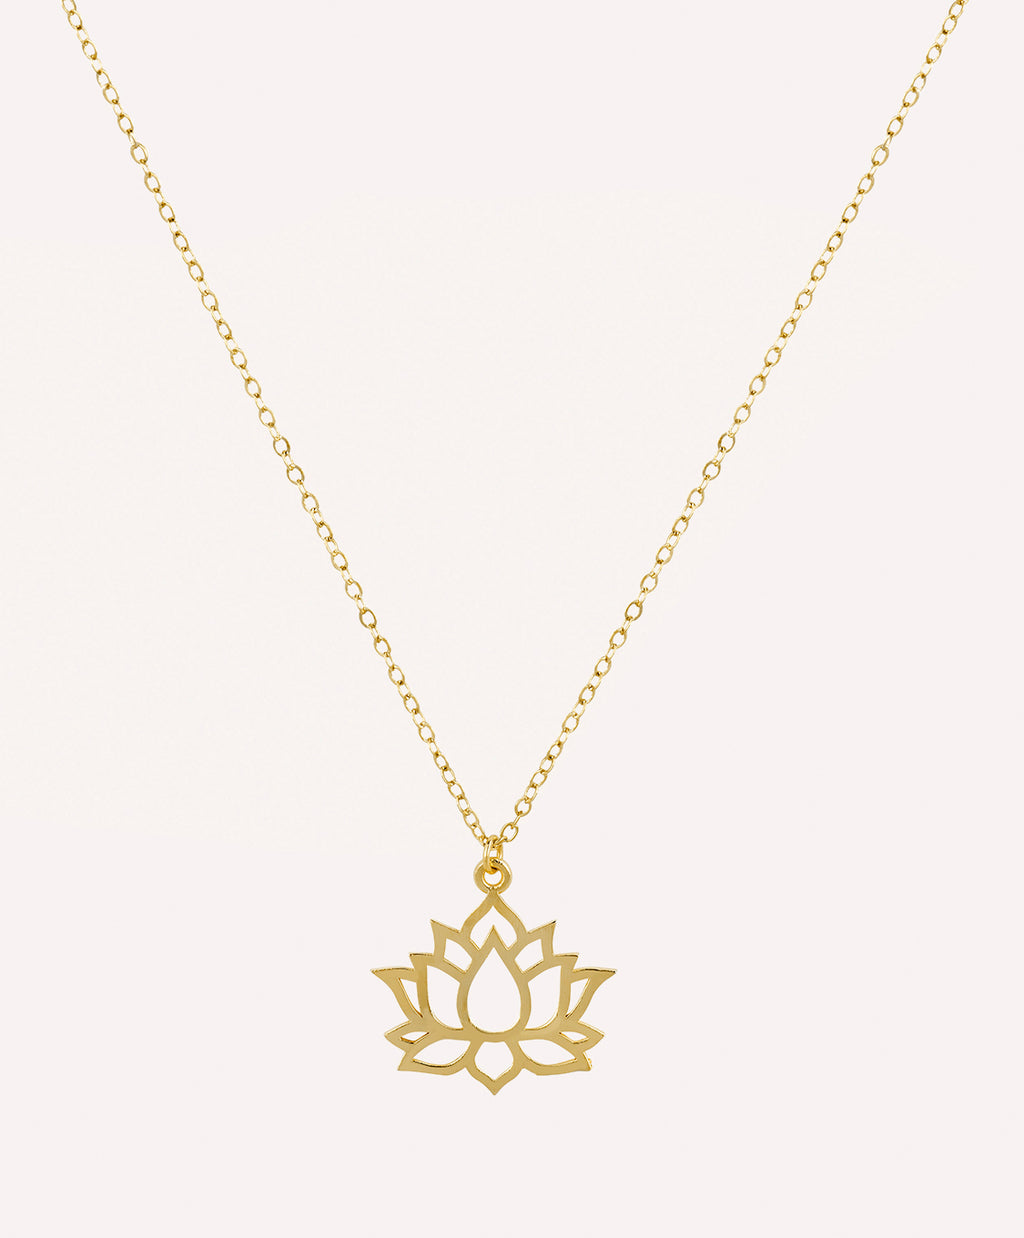 Lotus yoga charm gold necklace